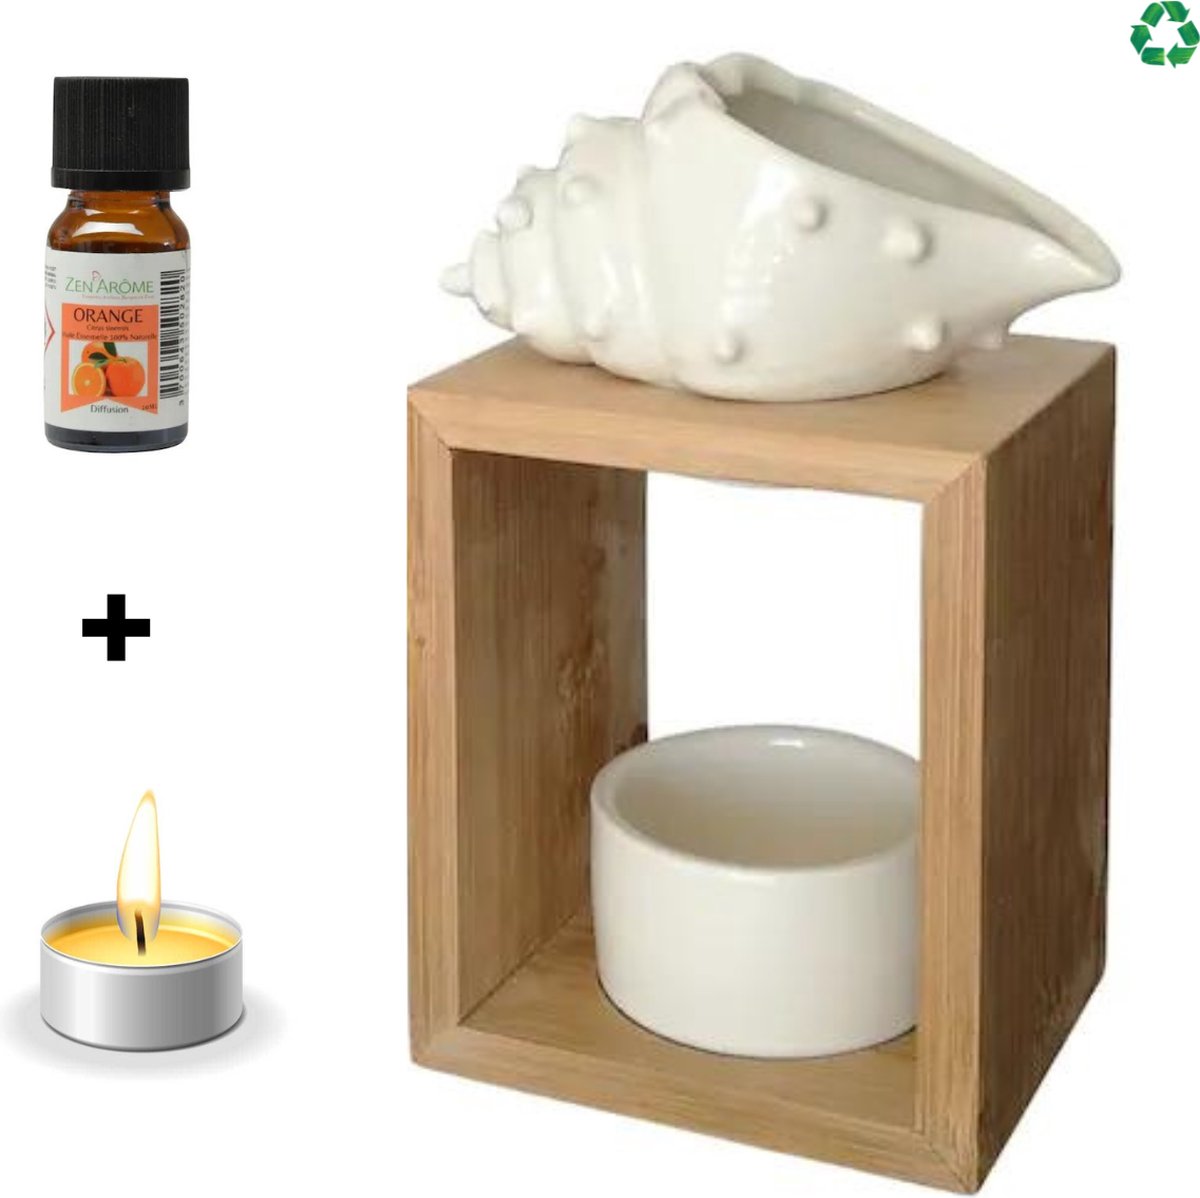 Zen Arome-Aroma Diffuser-Geurbrander-Geurolie-Aromabrander Schelpje-Waxbrander-Etherische Olie-Aroma-Gratis Olie-Bamboe en Keramiek